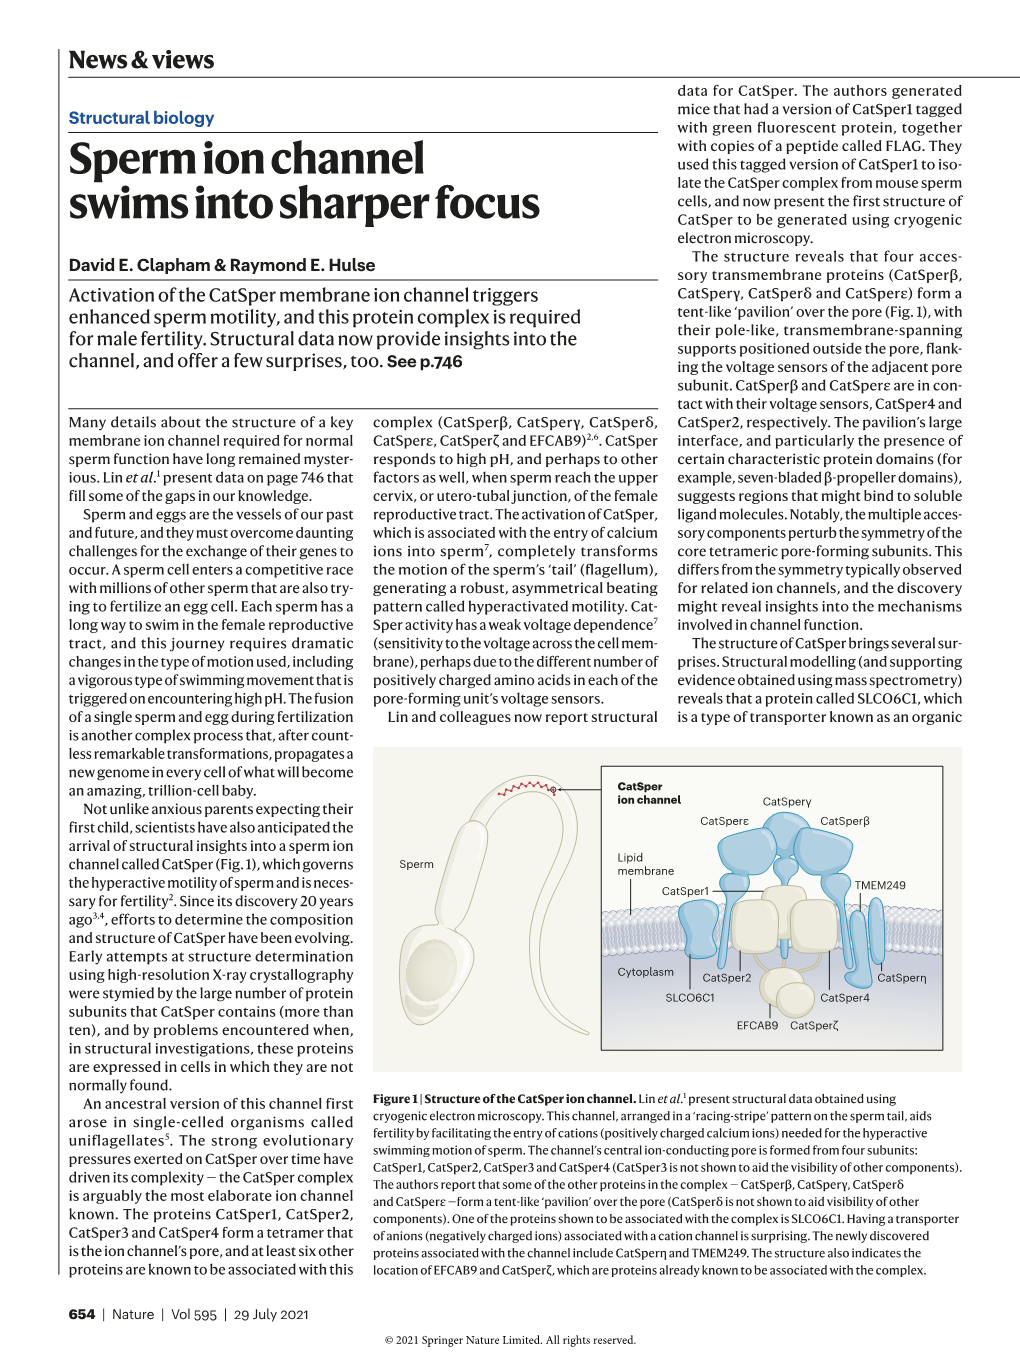 Sperm Ion Channel Swims Into Sharper Focus